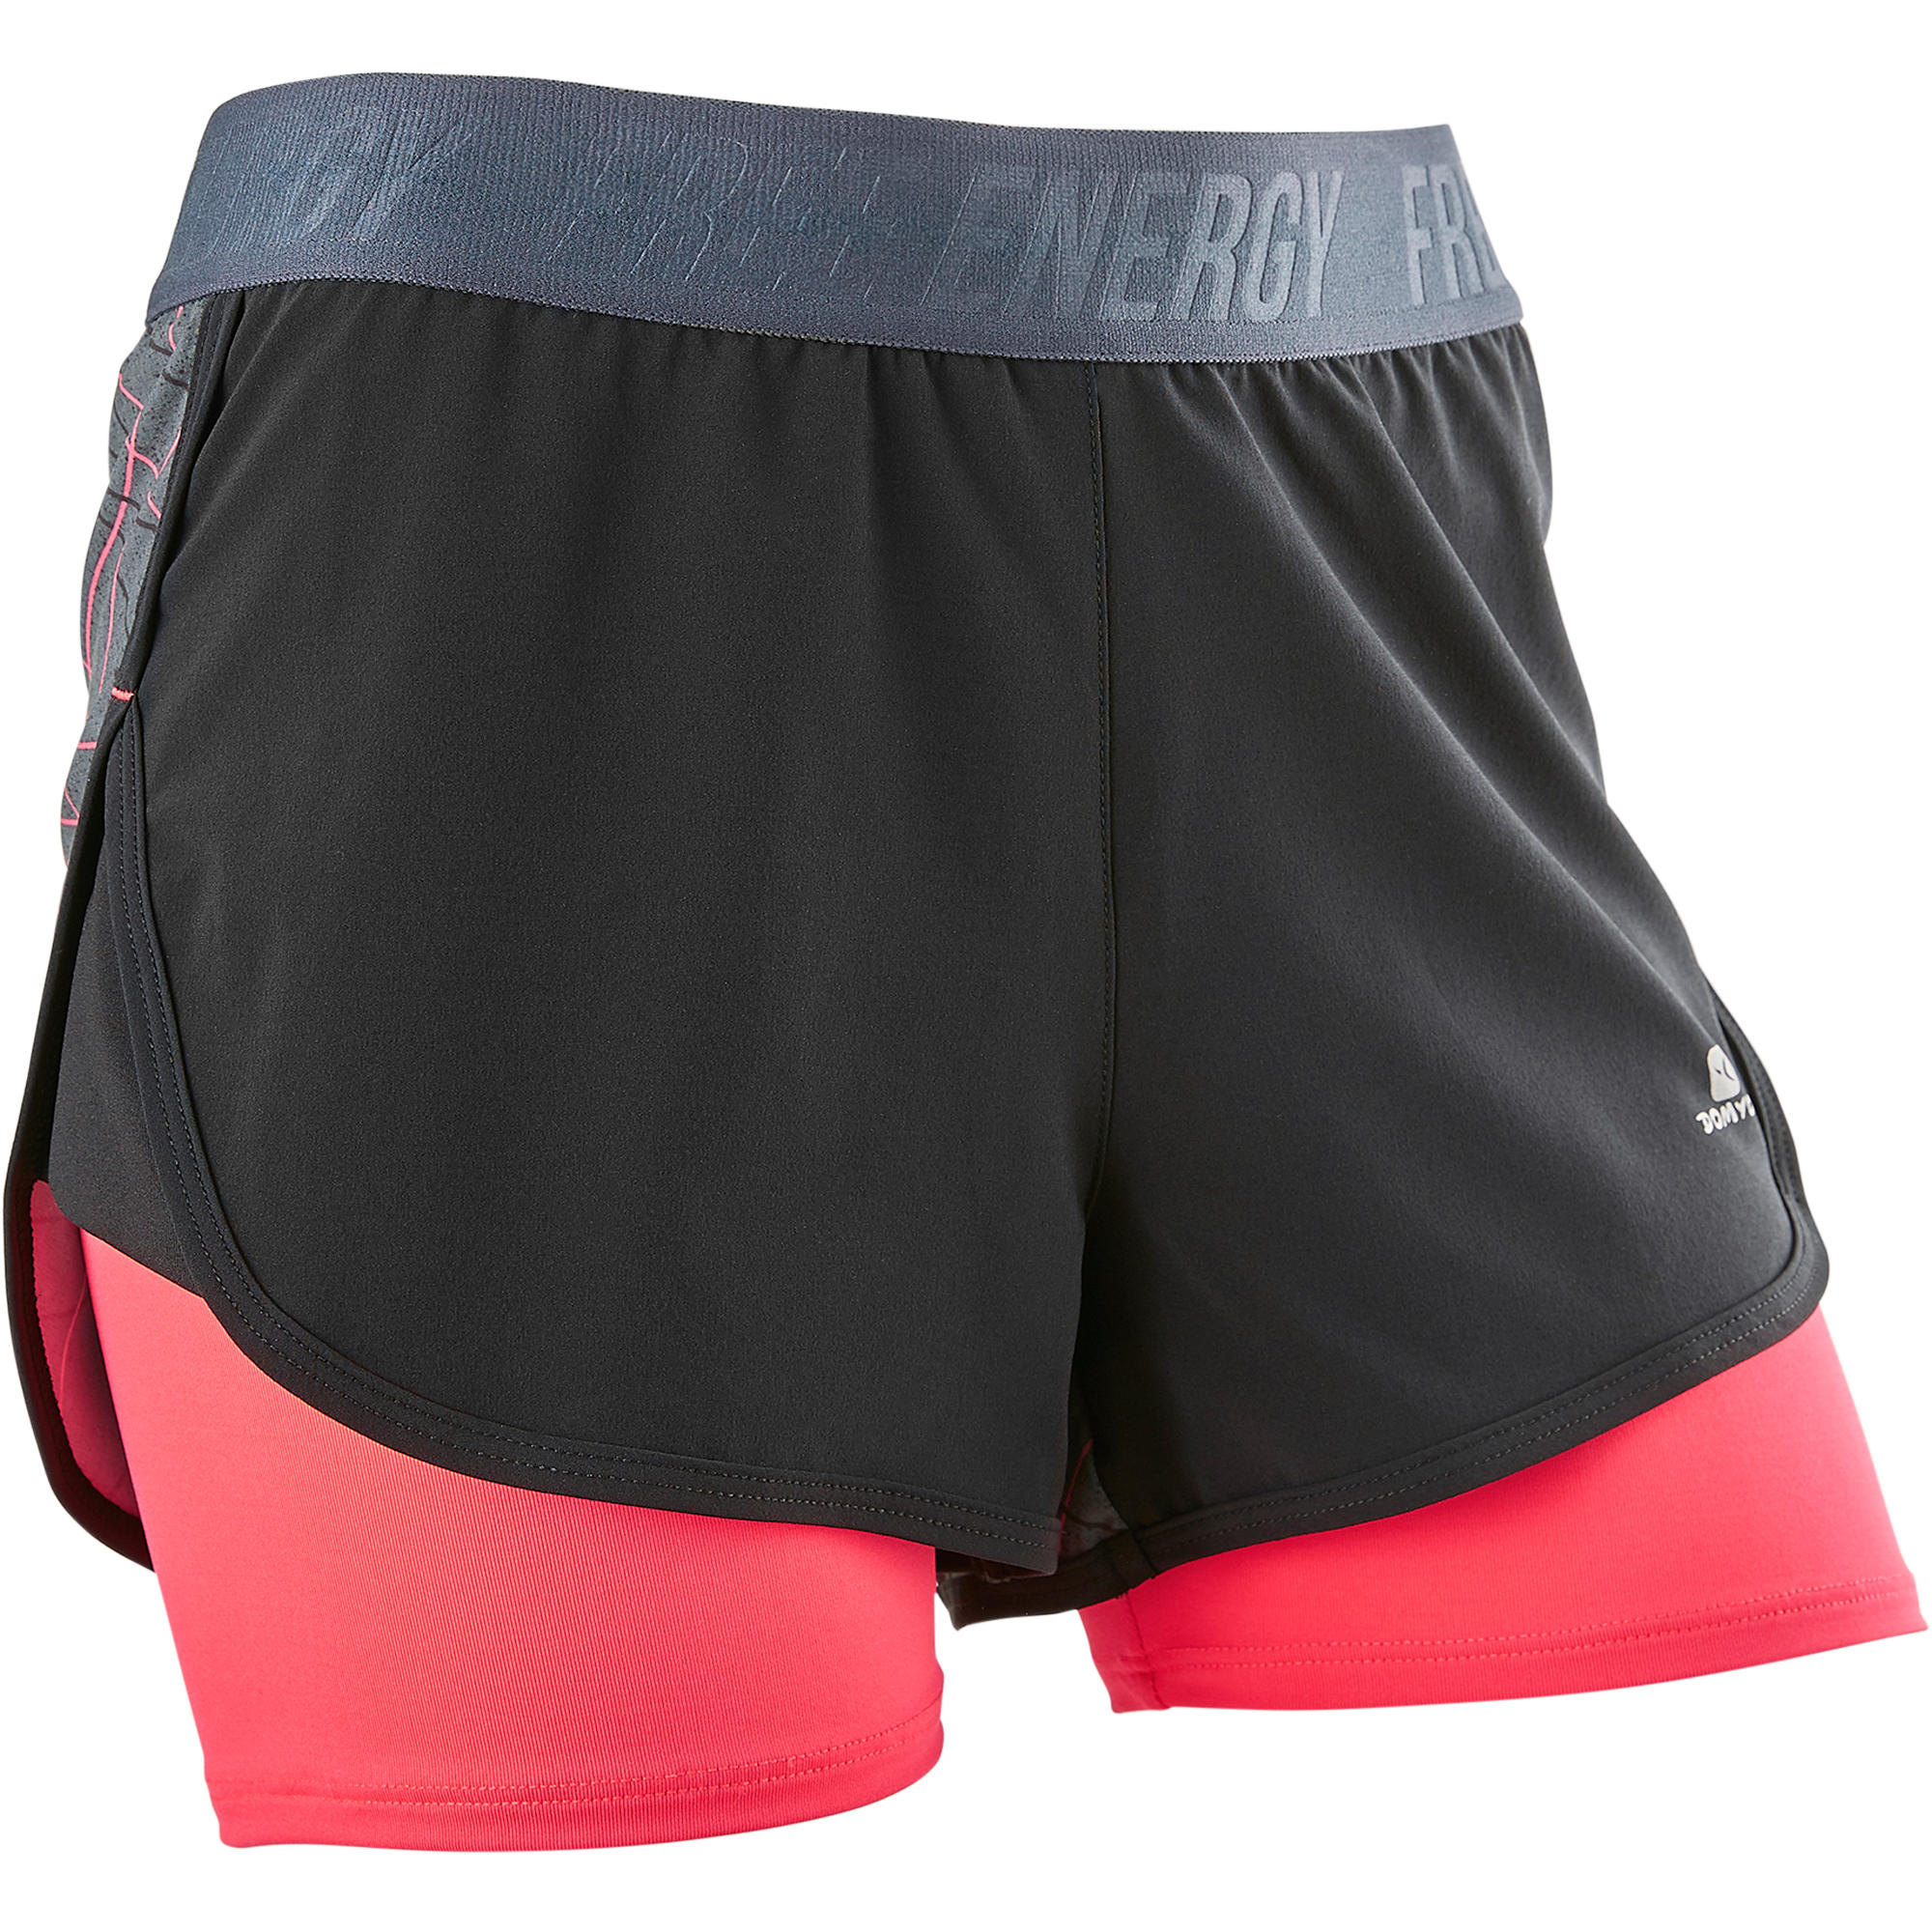 DOMYOS W900 Girls' Breathable Gym Shorts - Black Print